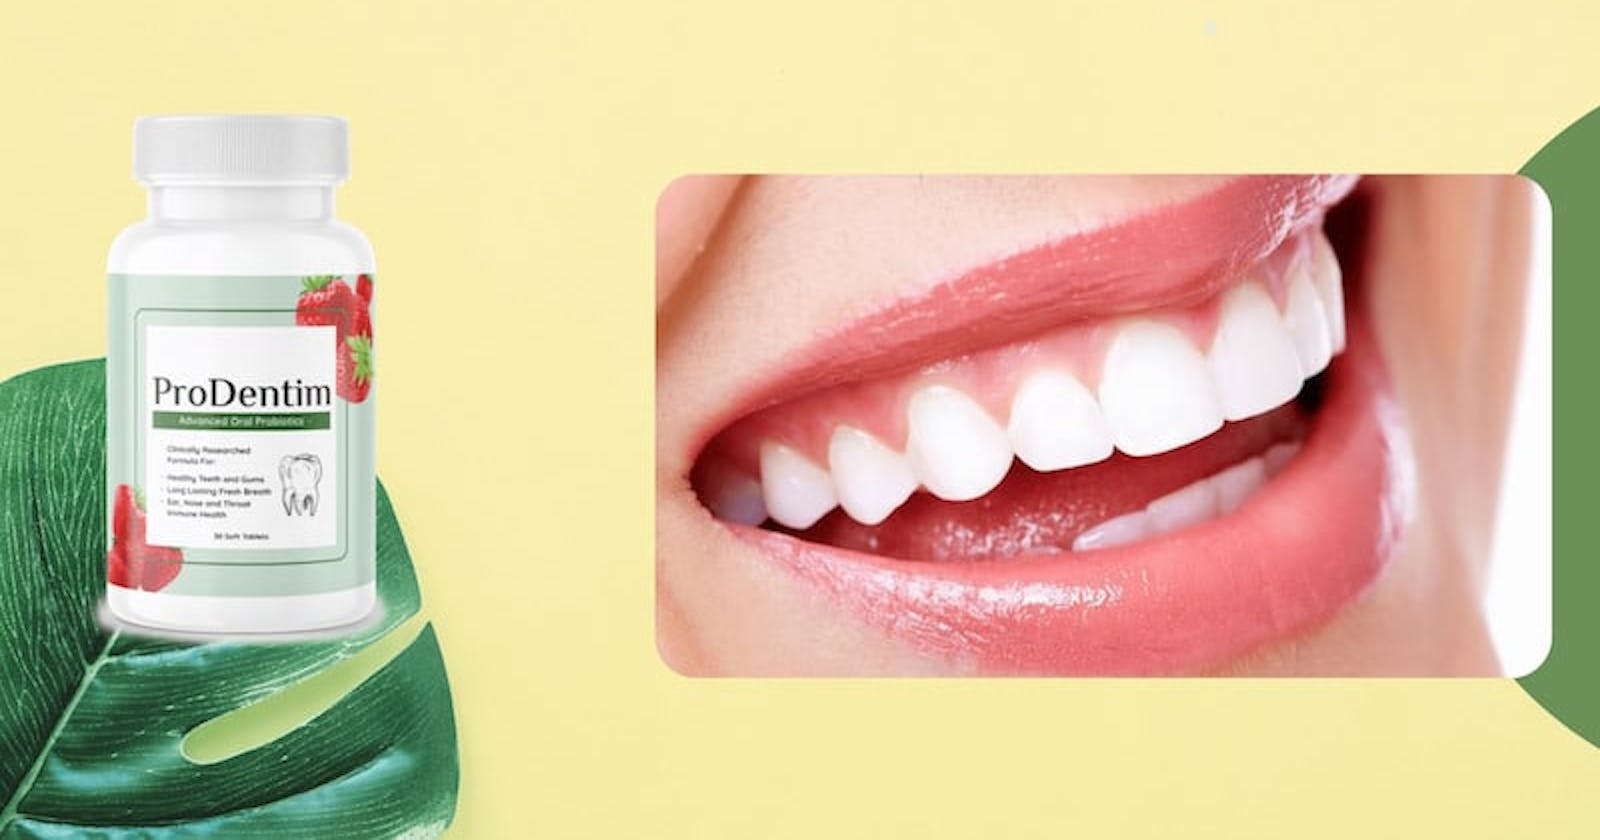 ProDentim Incredible Teeth Care Formula